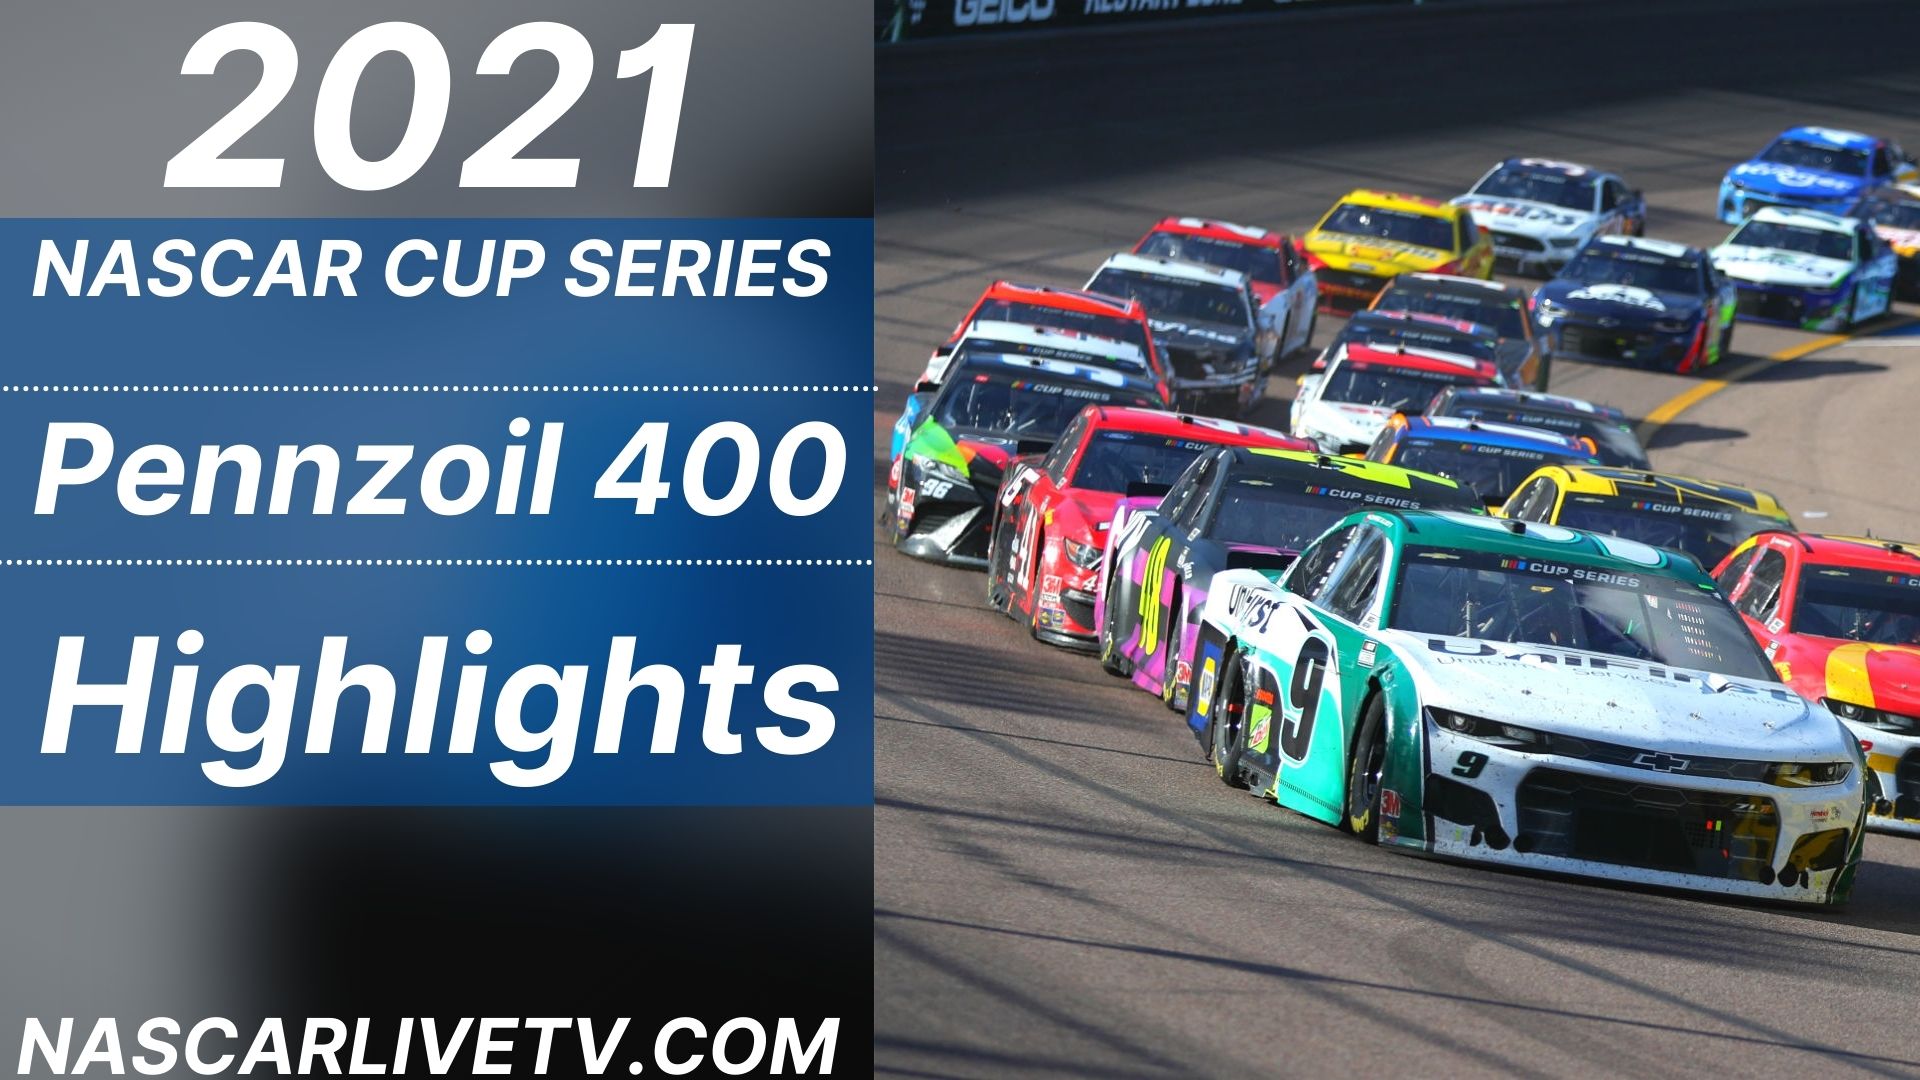 Pennzoil 400 Highlights NASCAR Cup Series 2021